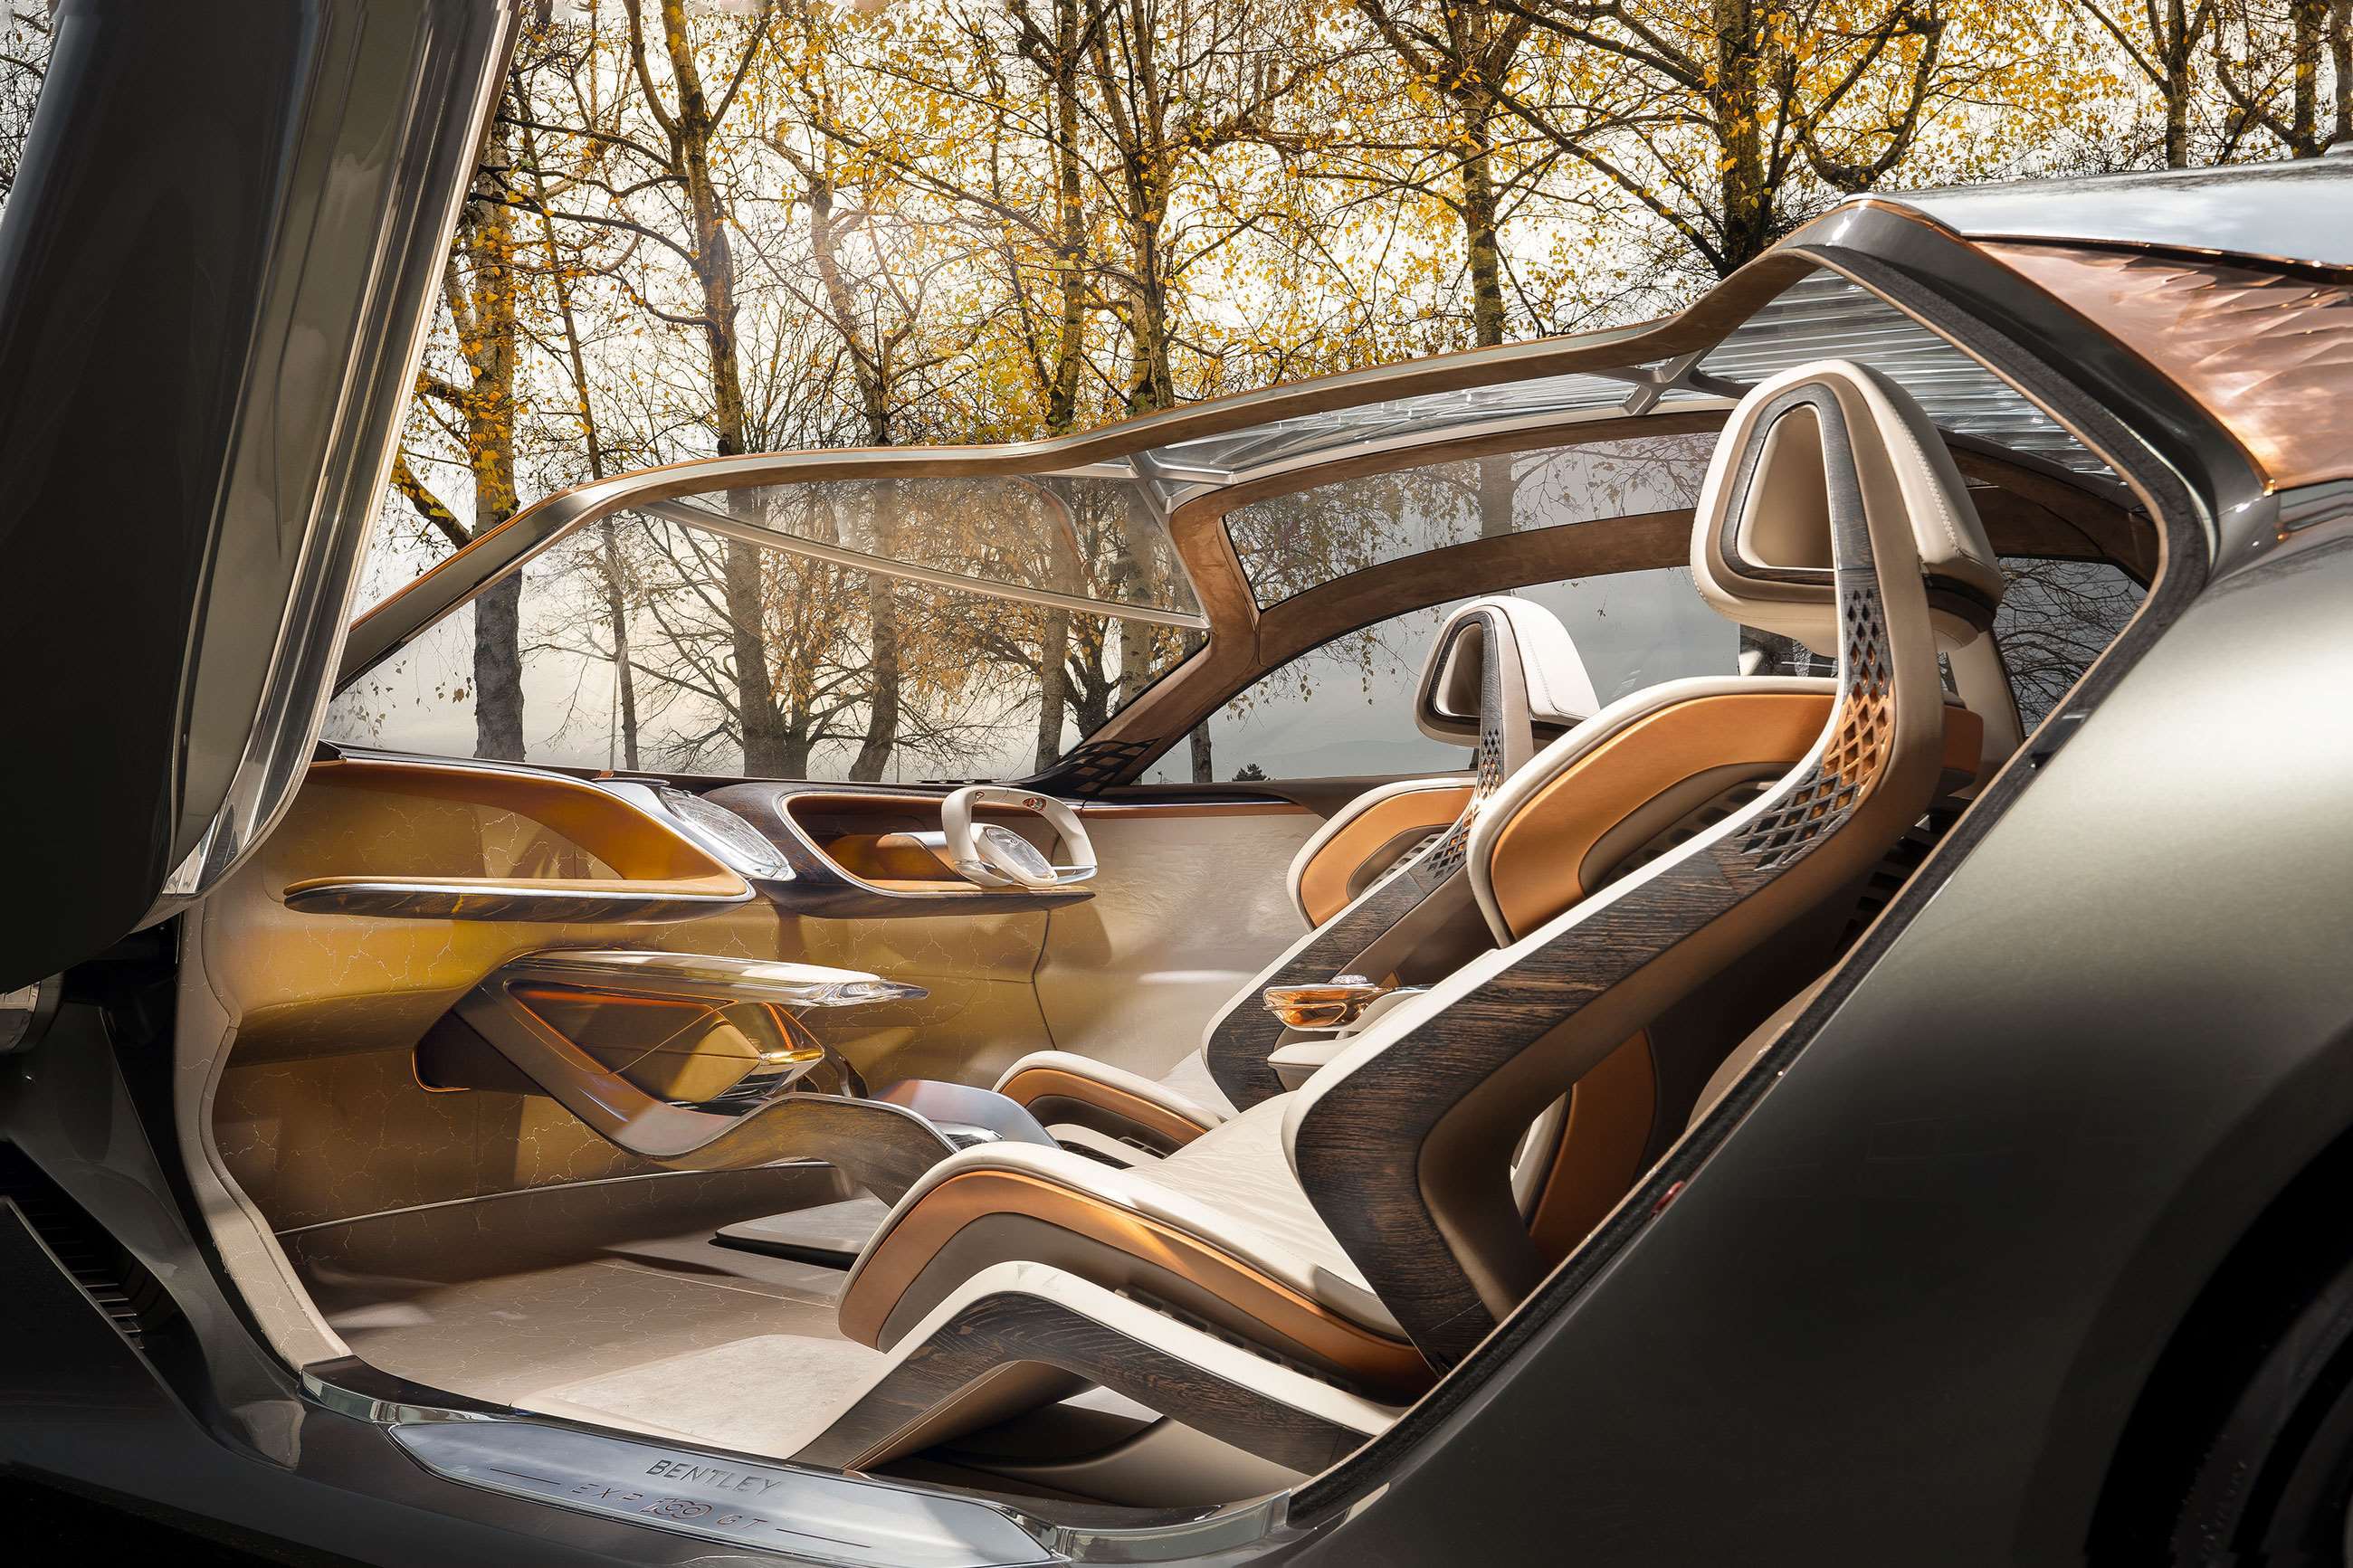 sustainable-car-interiors-bentley-exp-100-gt-interior-goodwood-25032020.jpg